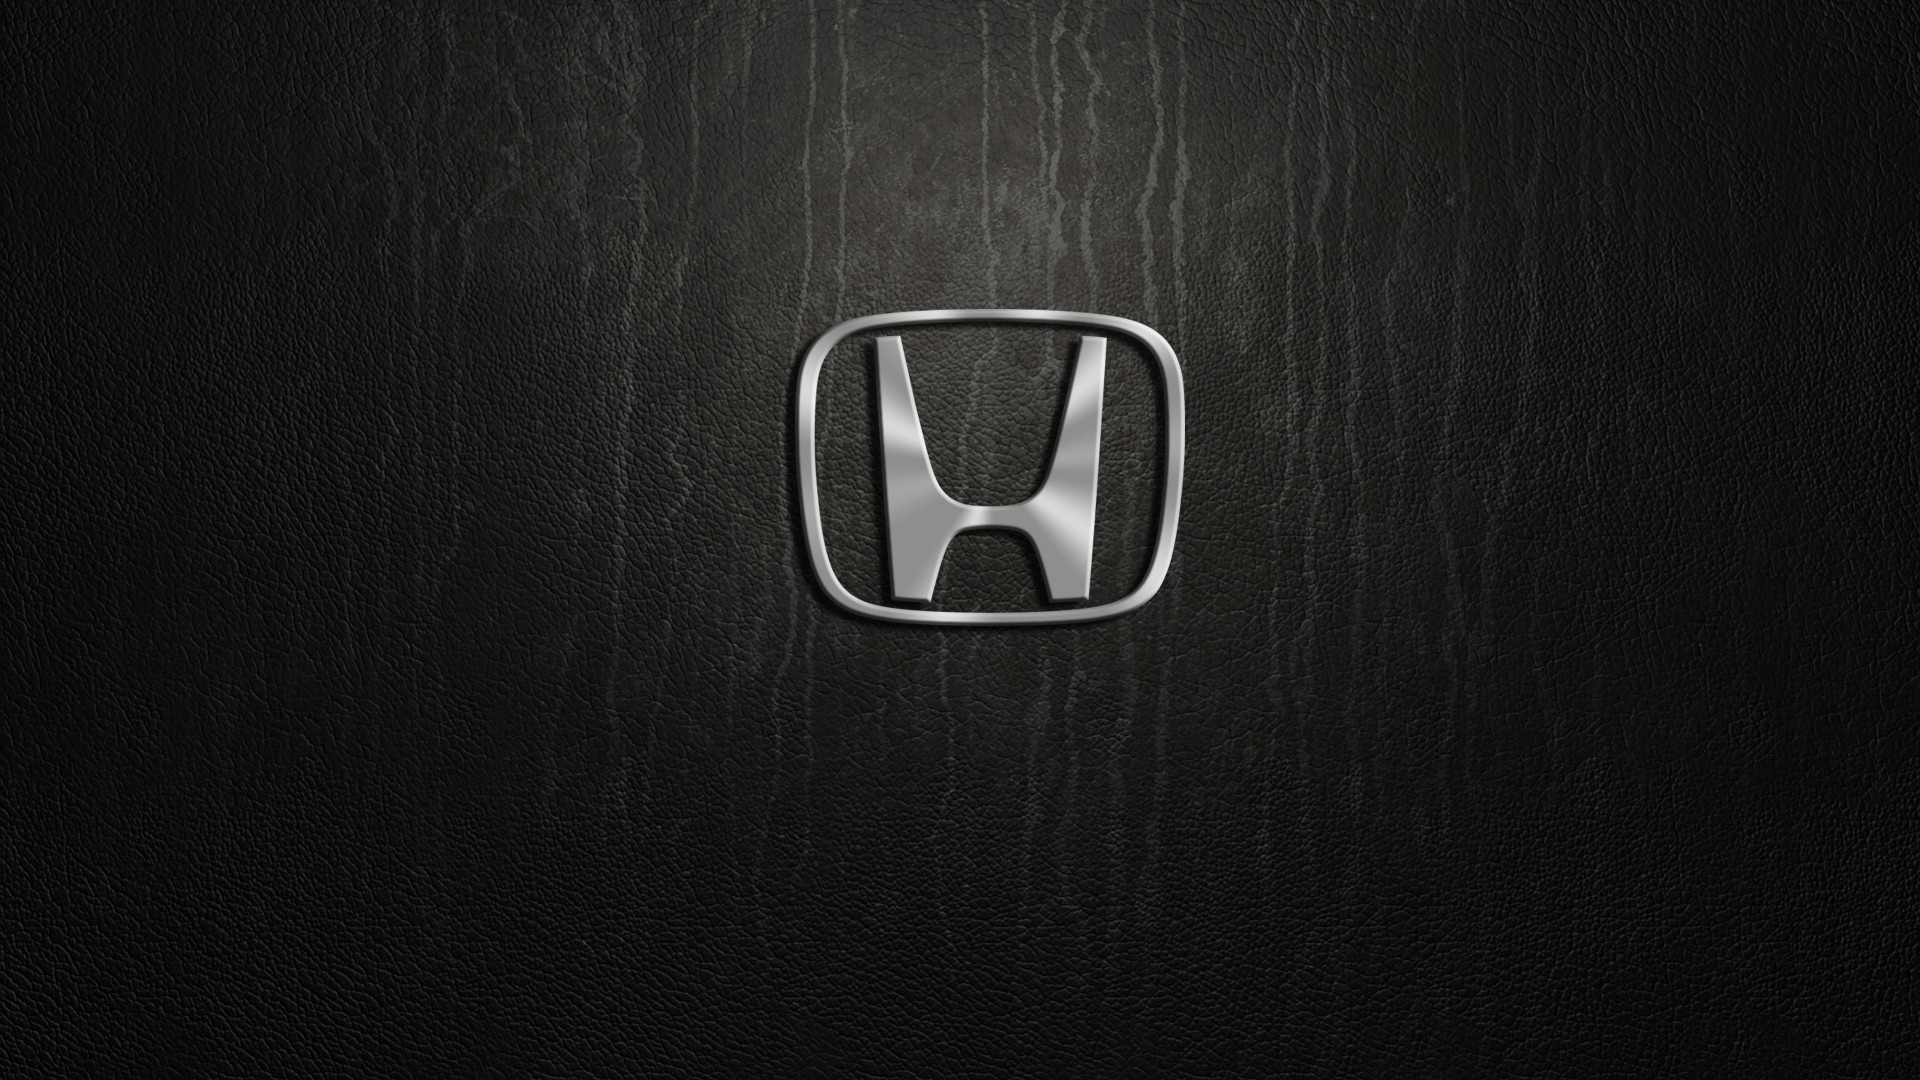 Honda Accord Logo Wallpapers Top Free Honda Accord Logo Backgrounds Wallpaperaccess